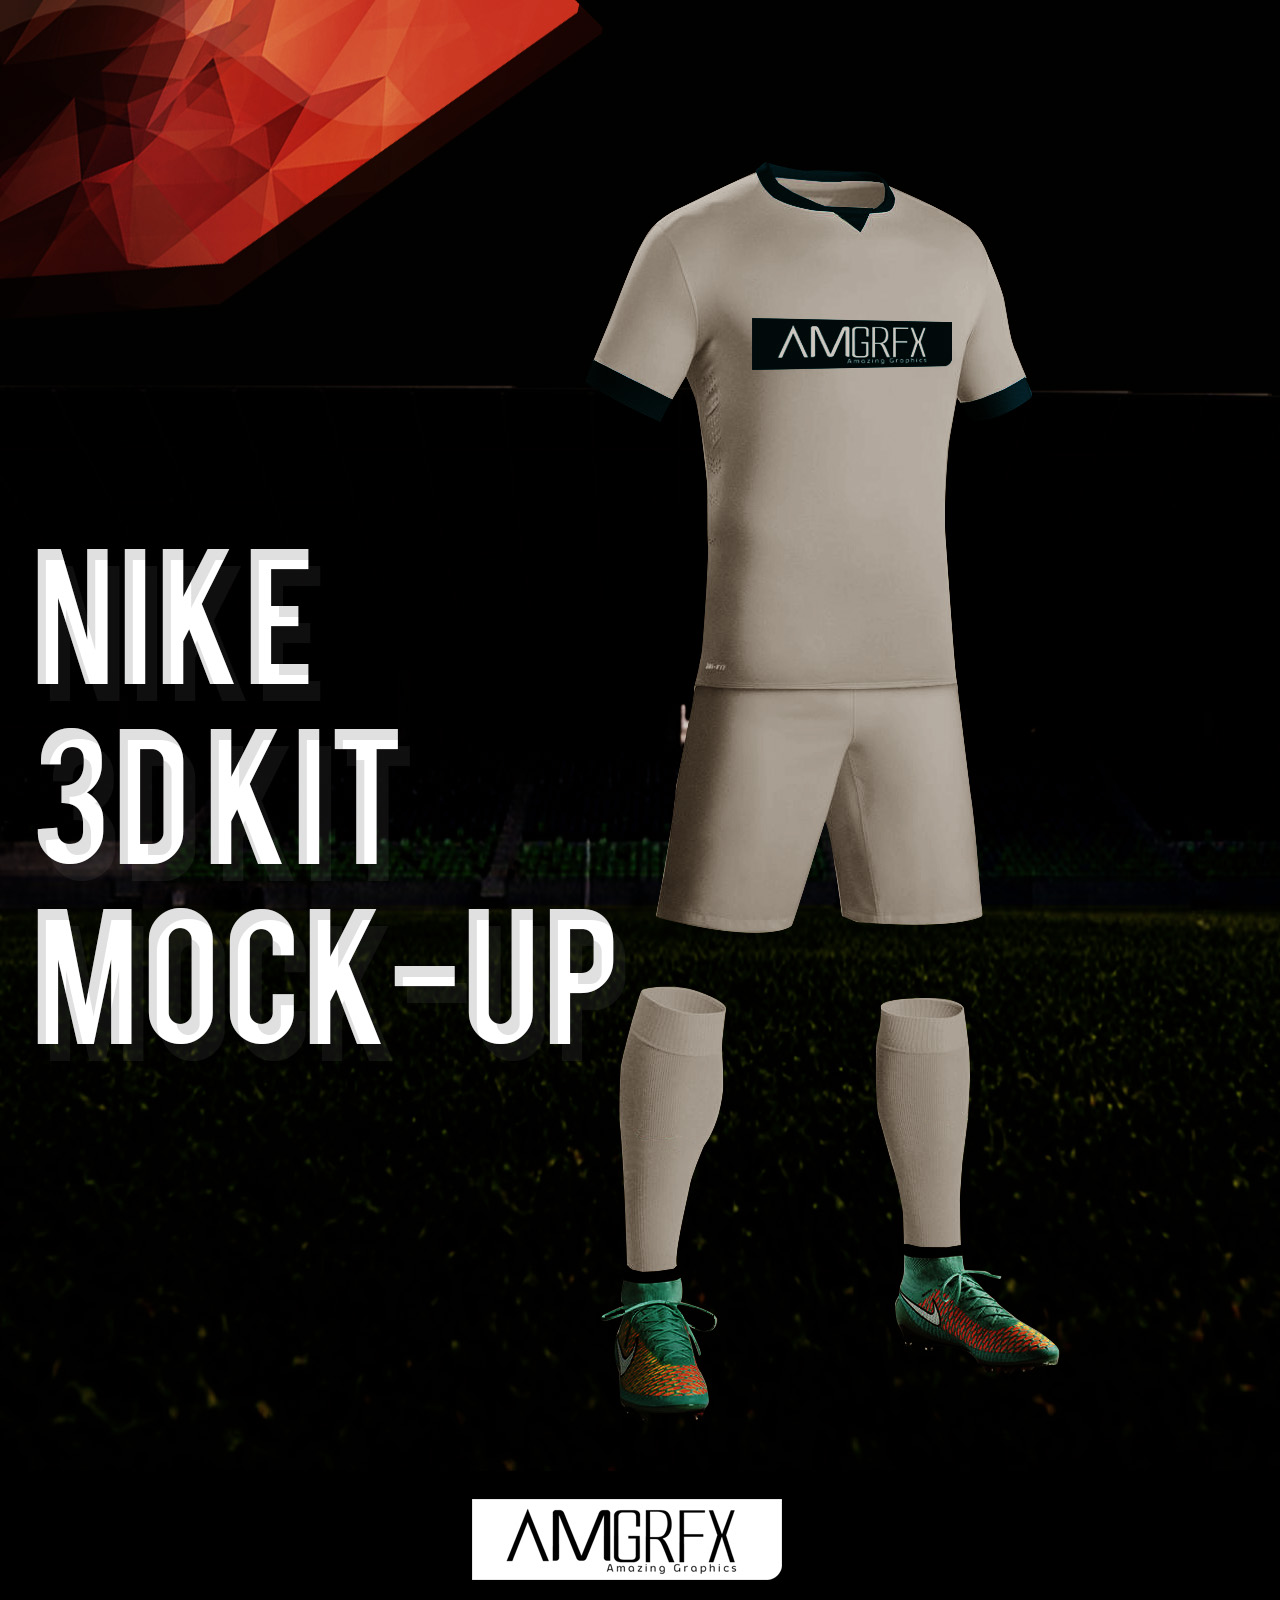 Download Amgrfx Nike 3d Kit Mockup By Tourbido On Deviantart Free Mockups